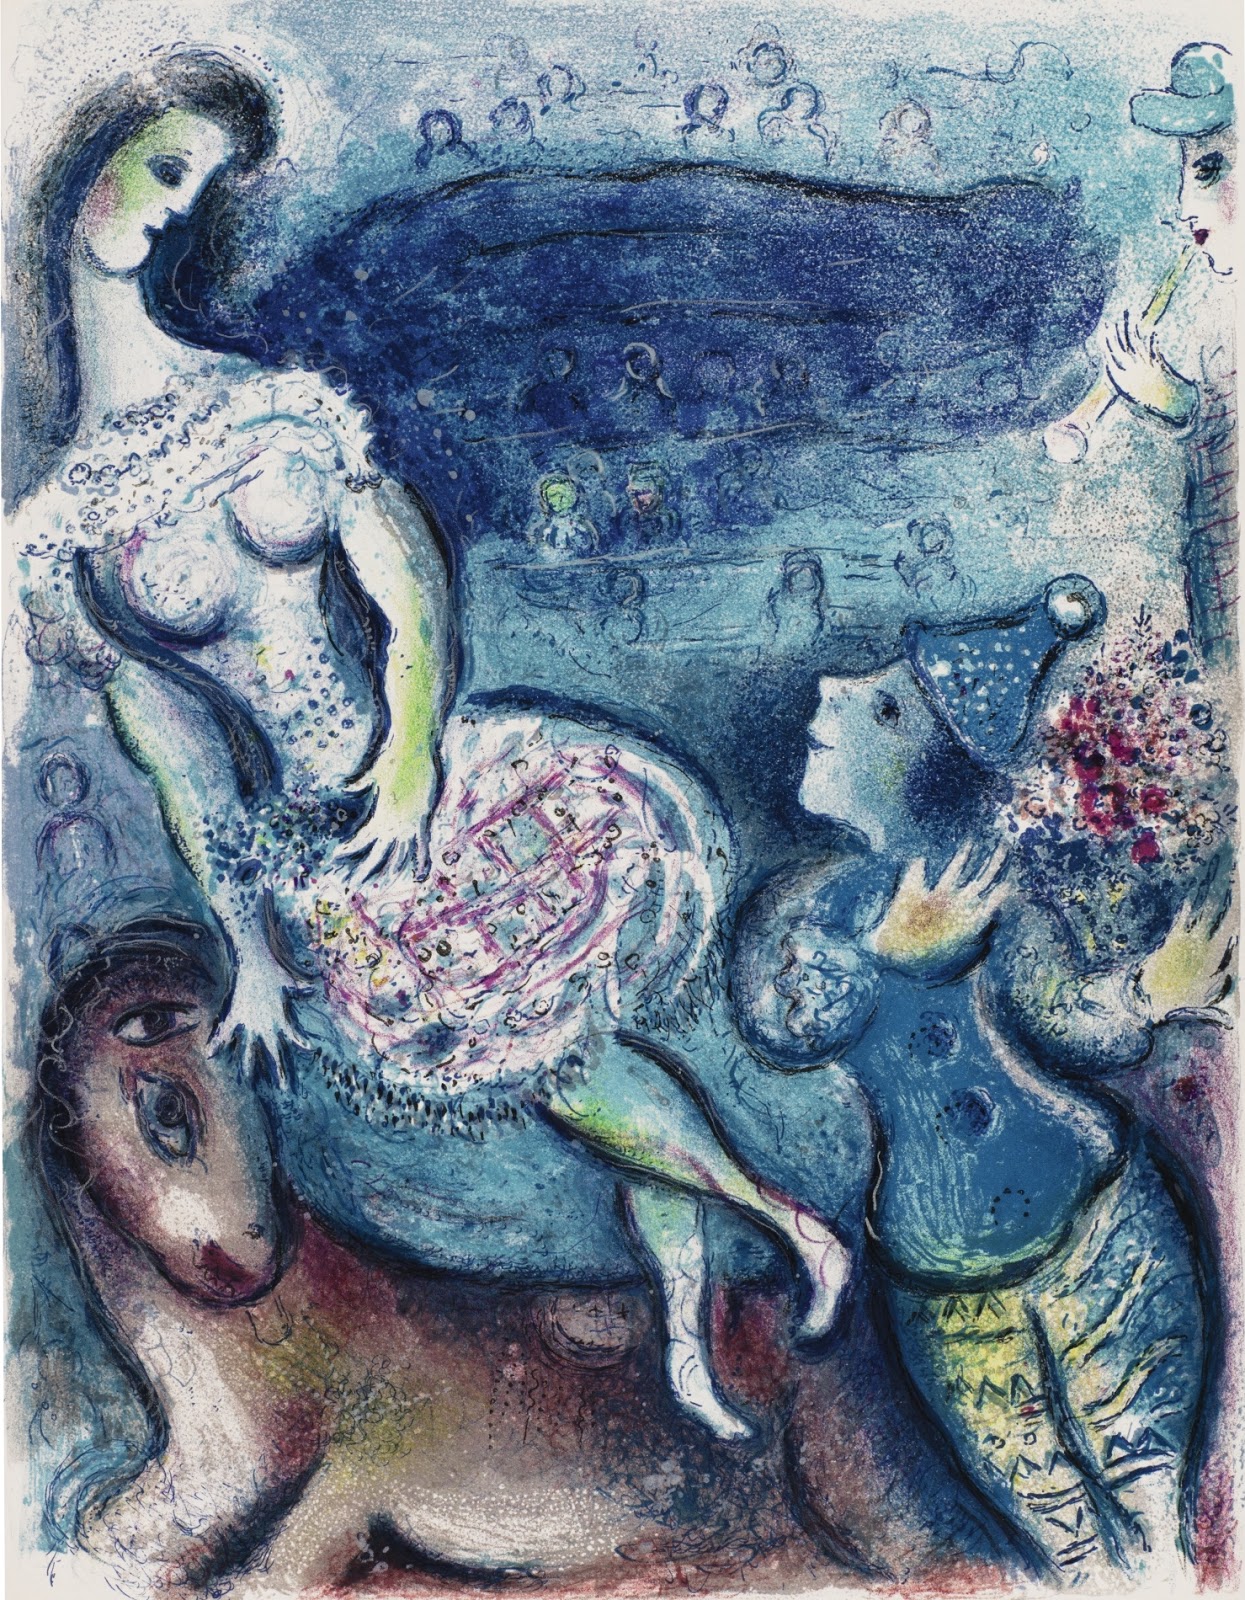 Marc+Chagall-1887-1985 (42).jpg